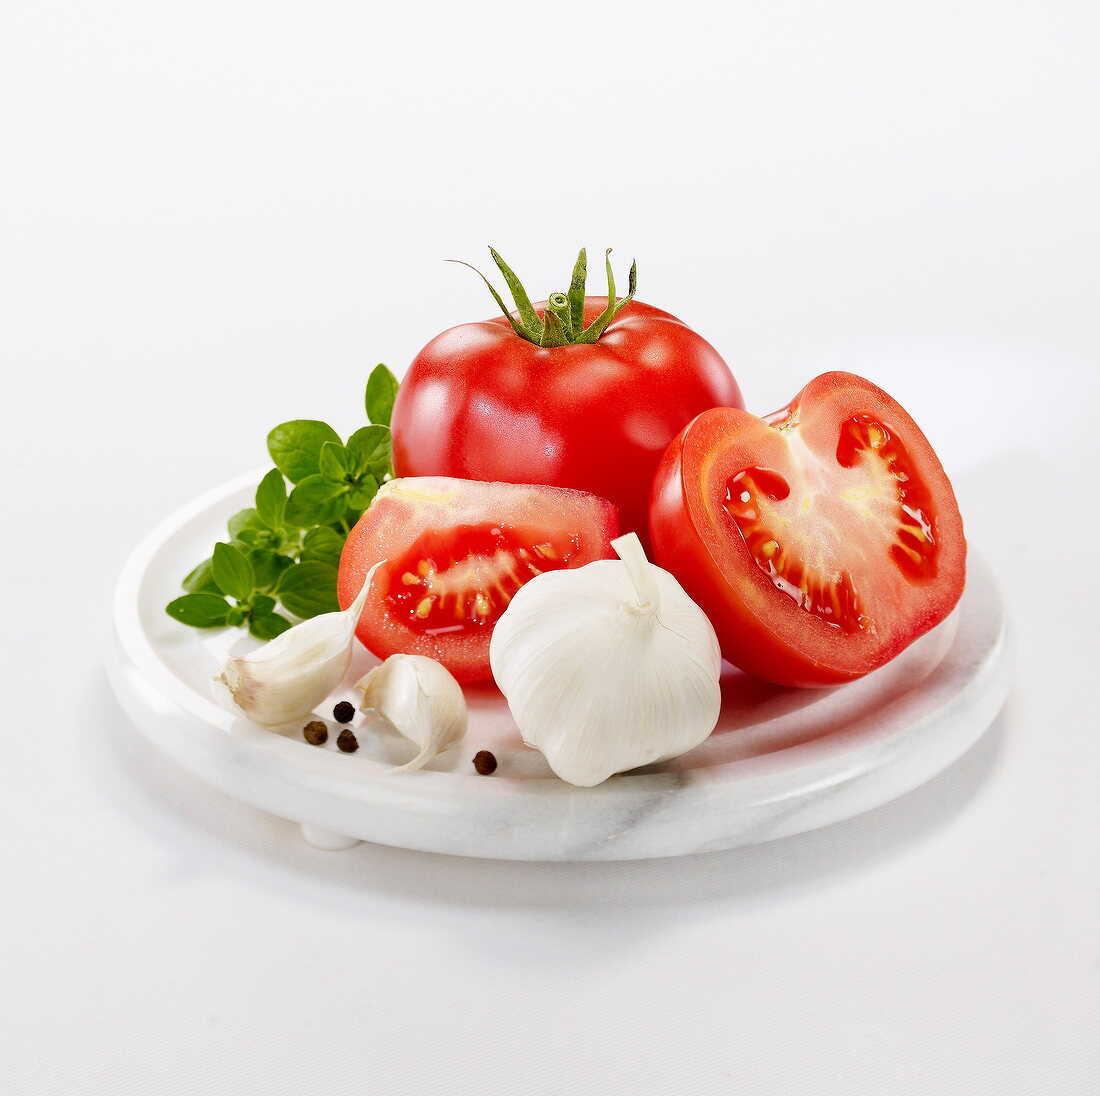 Tomaten, Knoblauch, Pfeffer und Basilikum